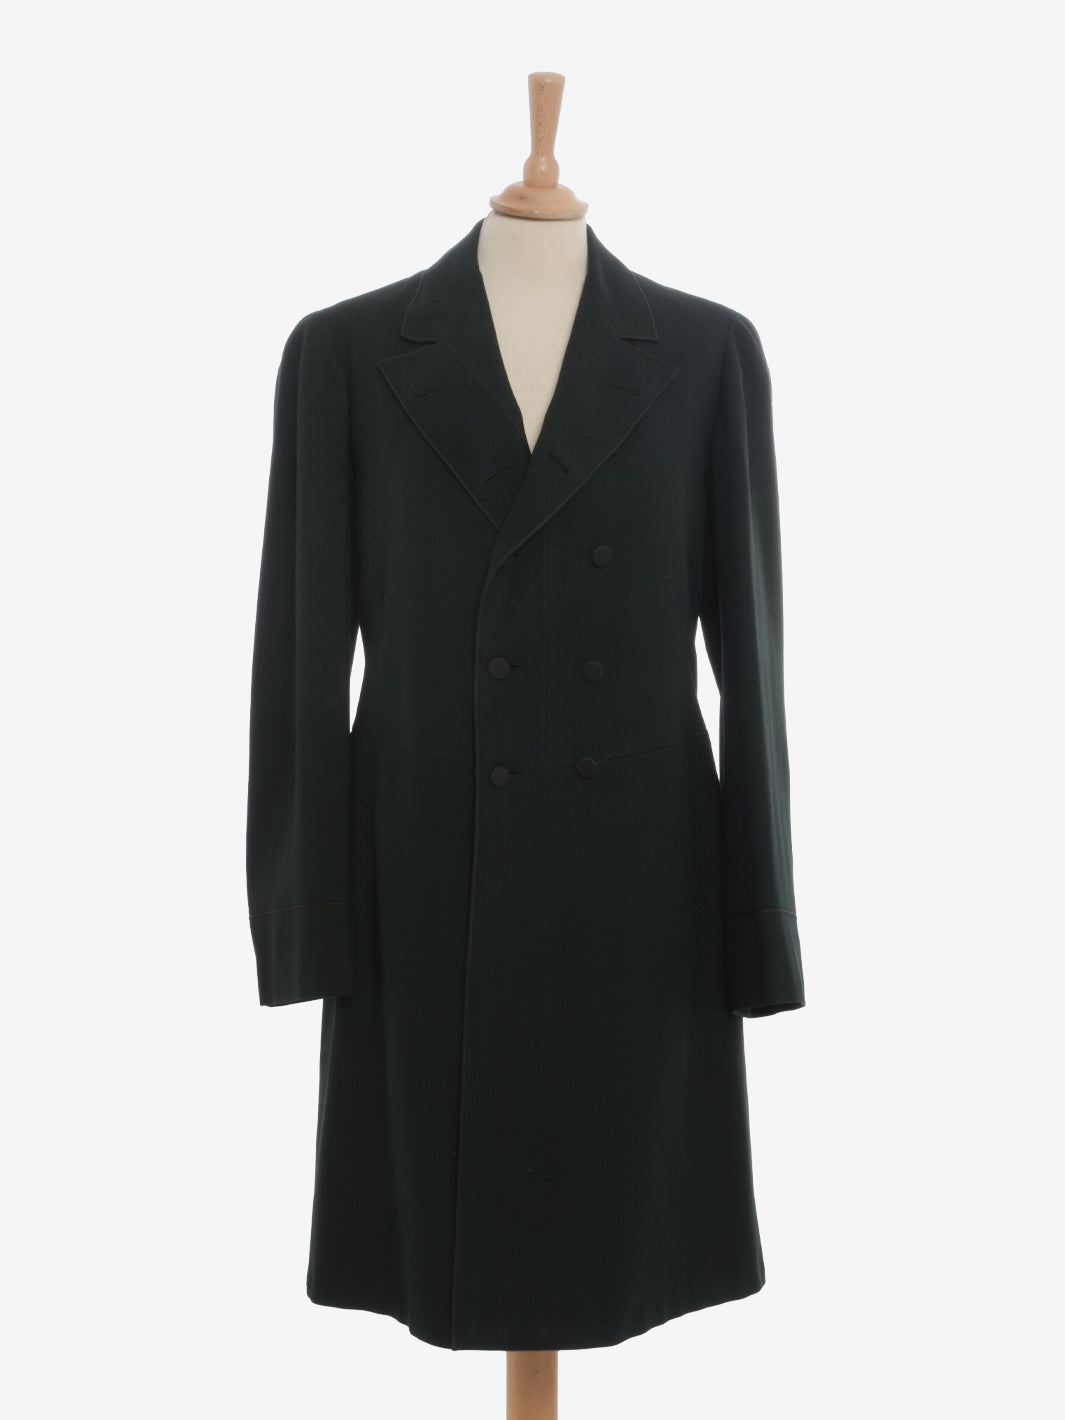 Vintage Double-breast Coat - 1800